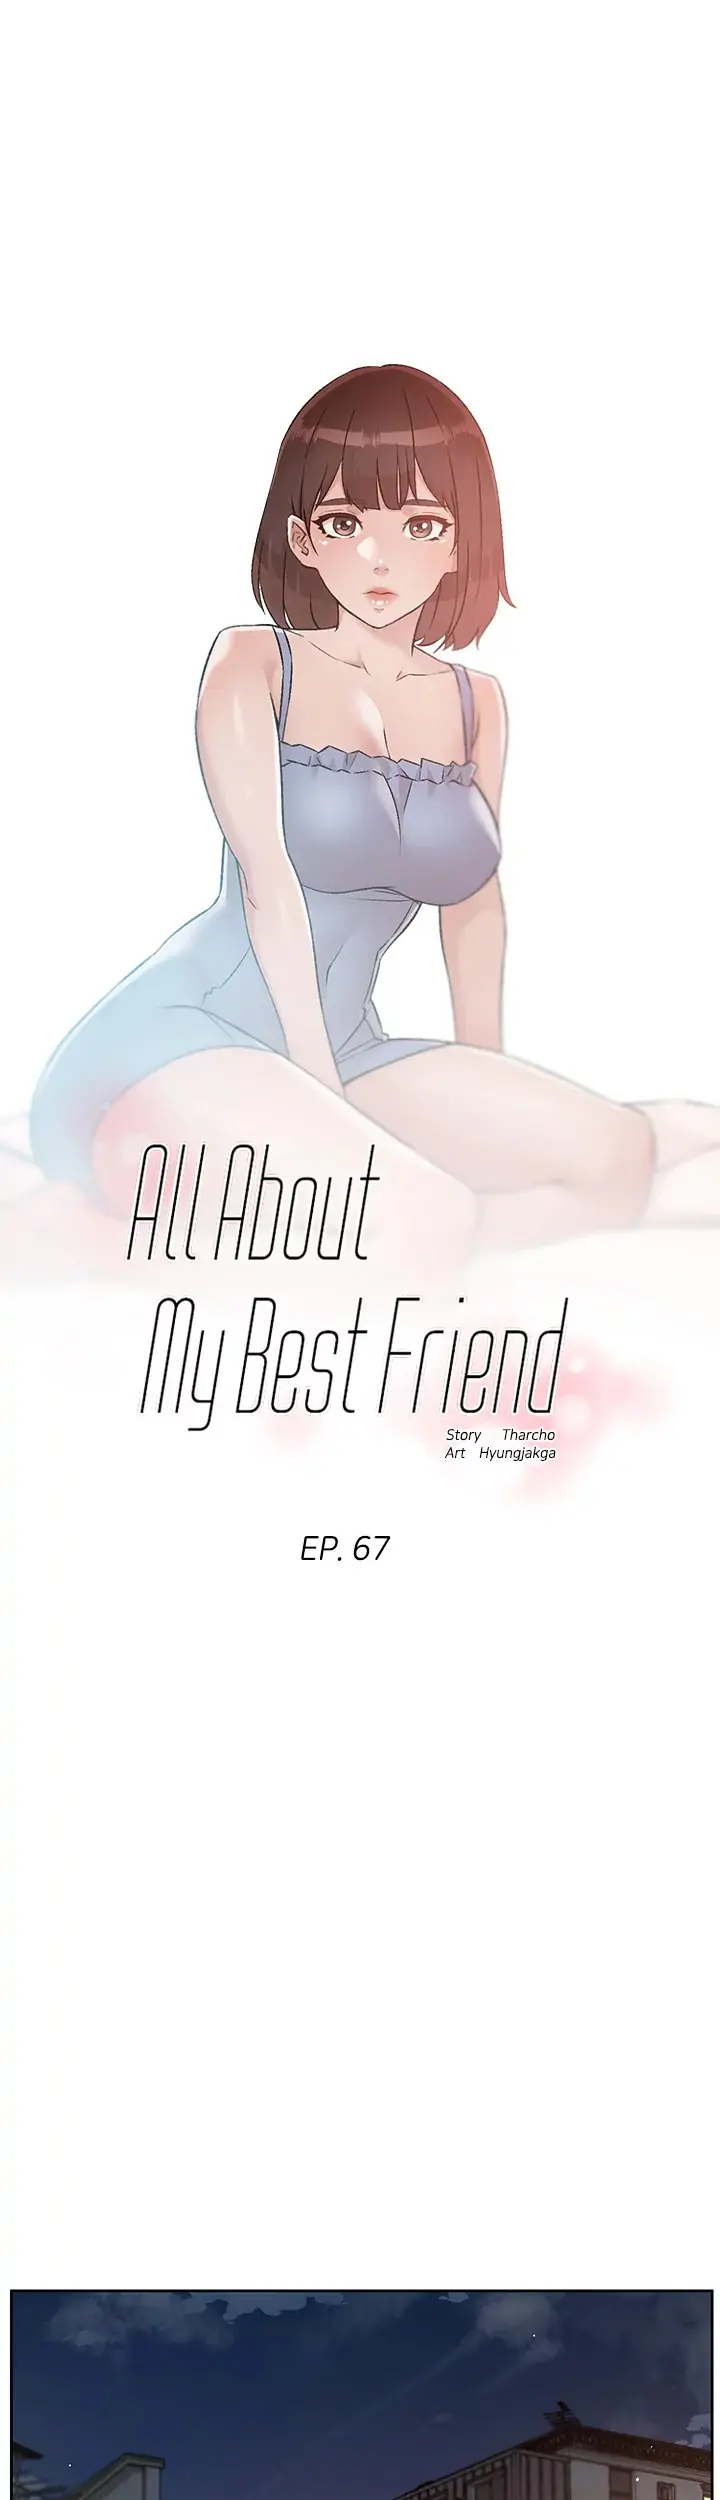 All about my best friend webtoon